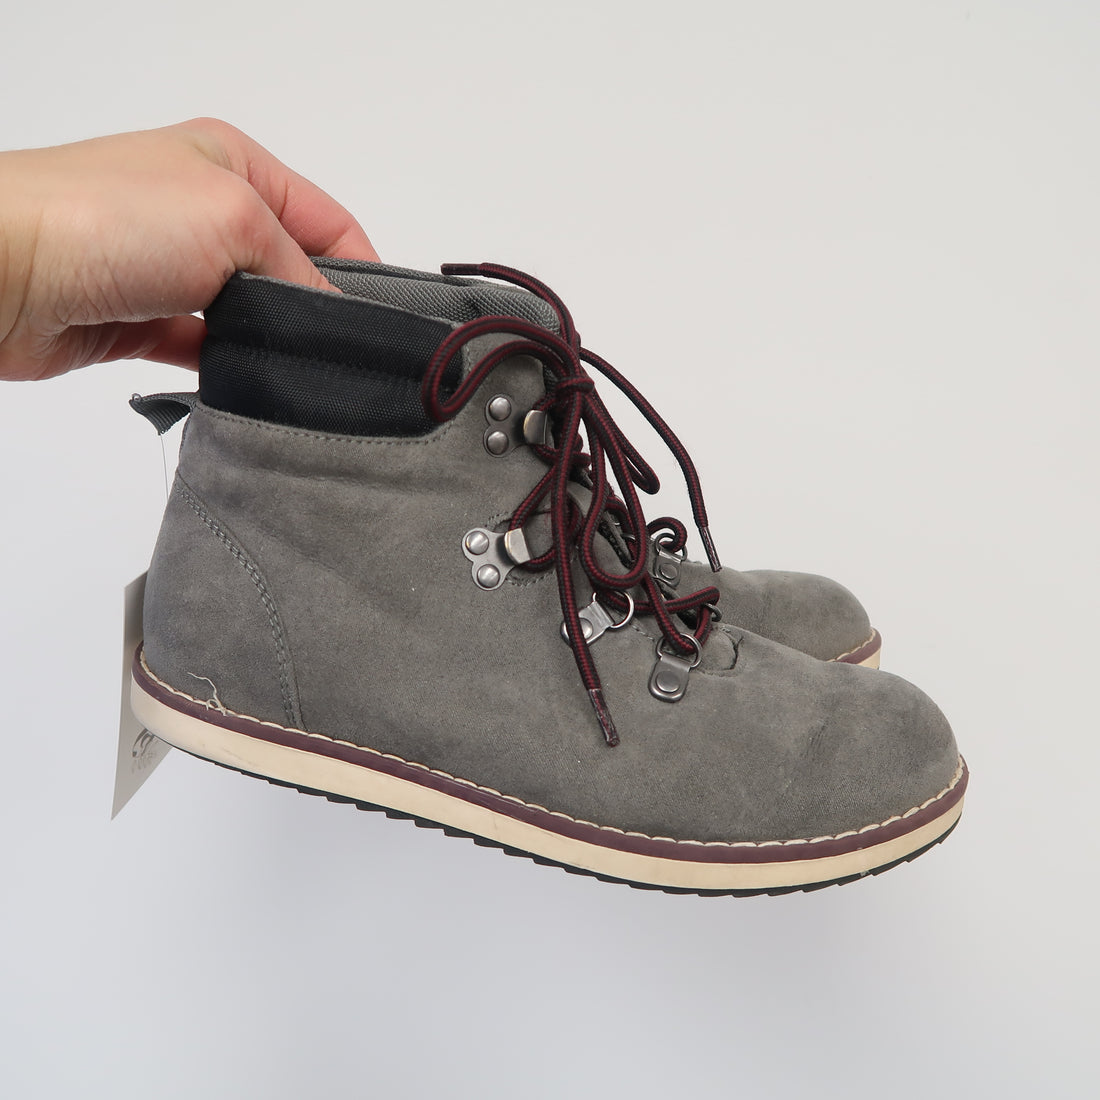 Gap - Boots (Shoes - Big Kids 2)